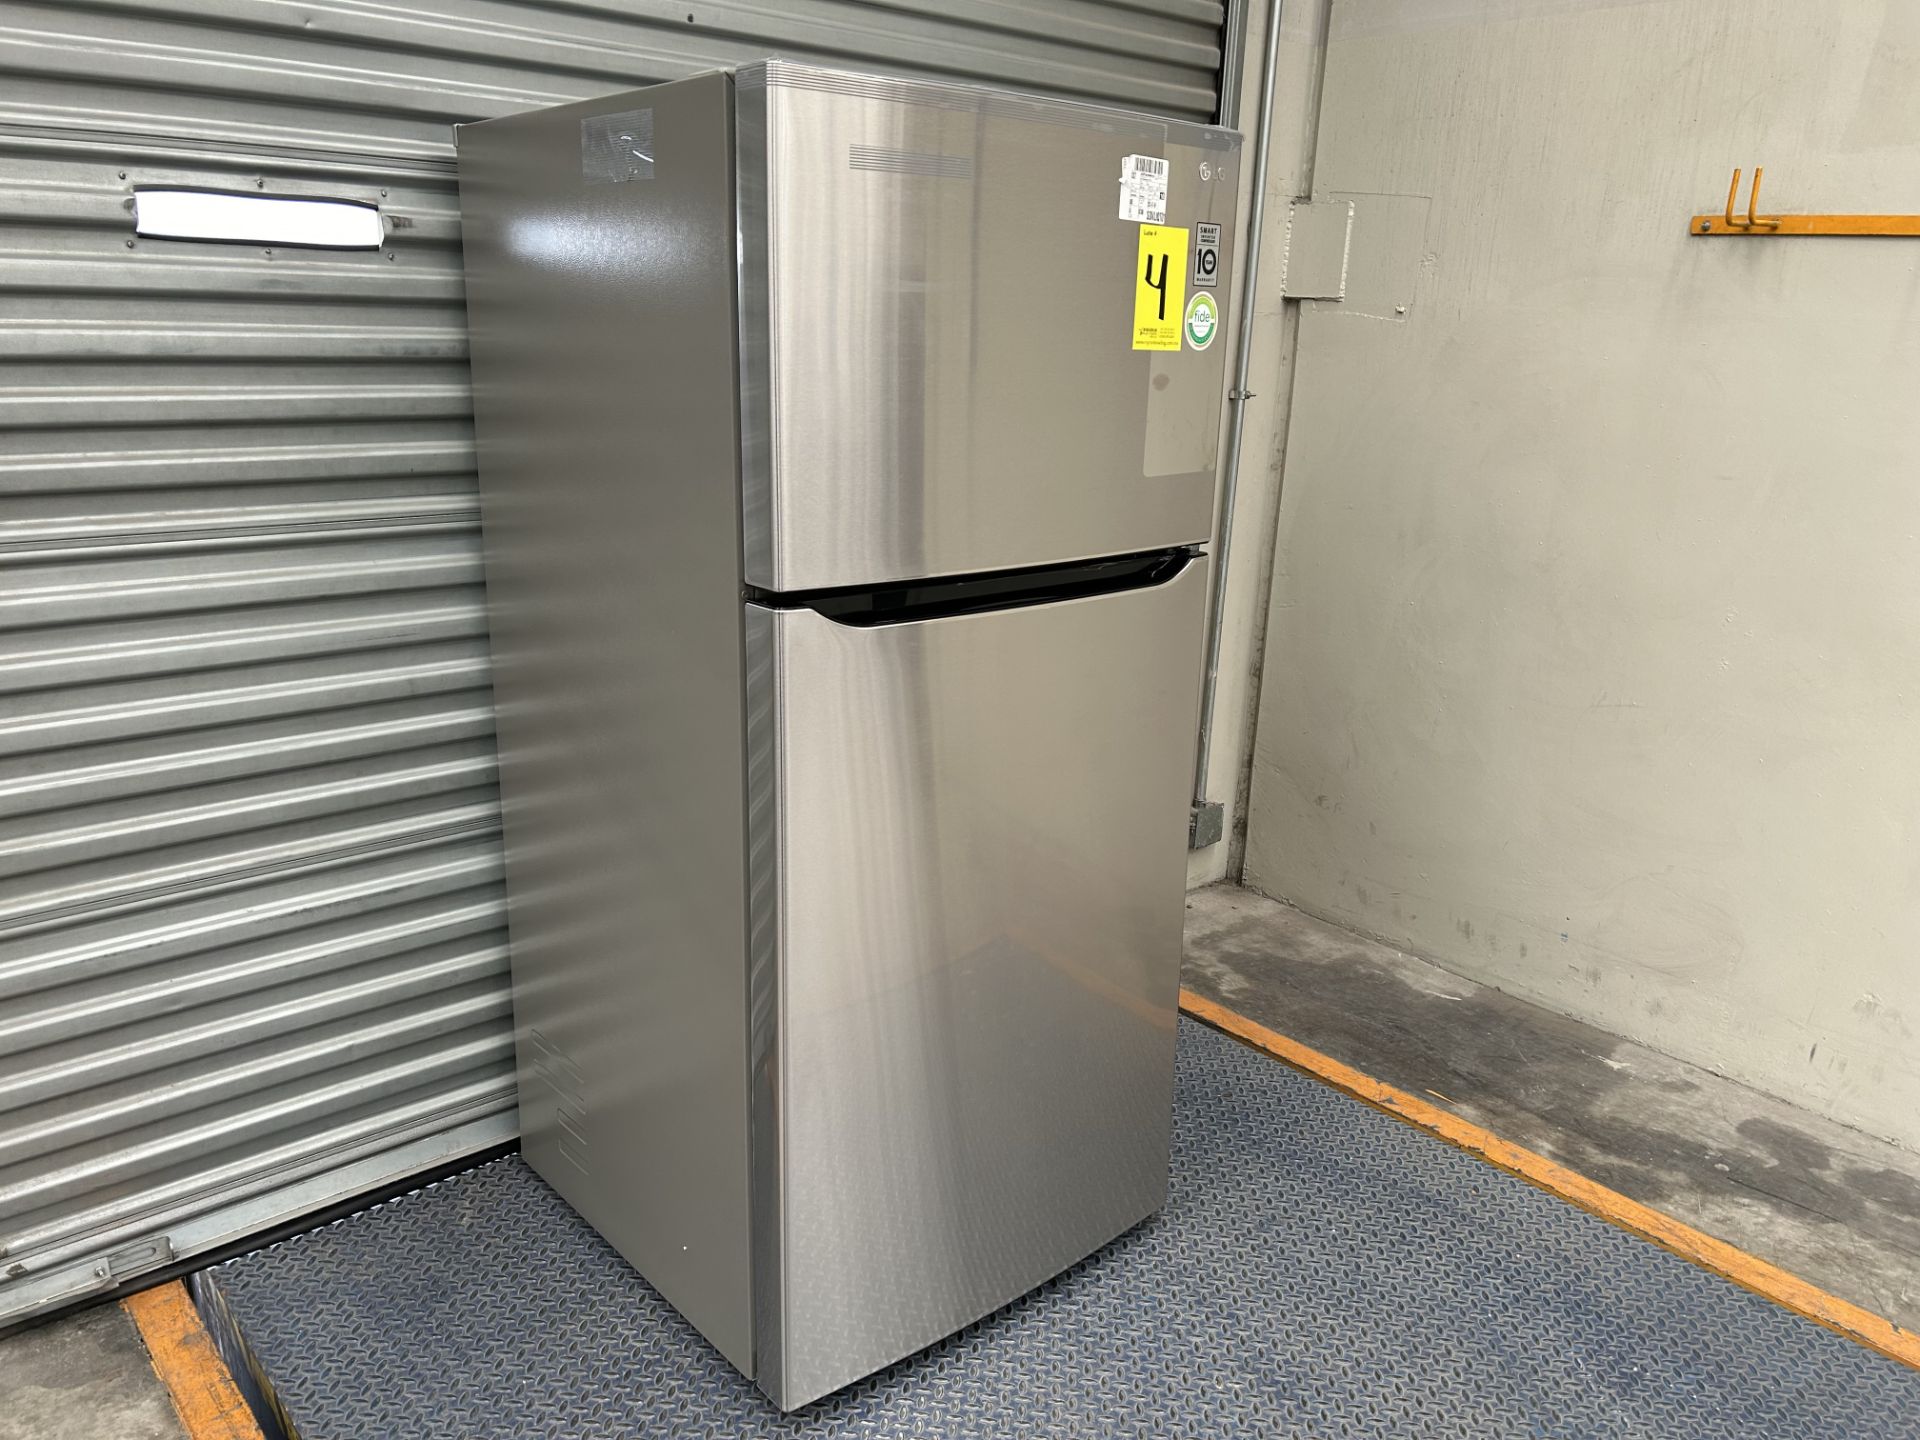 (NUEVO) Lote de 1 Refrigerador Marca LG, Modelo LT57BPSX, Serie 0C217, Color GRIS - Image 2 of 5